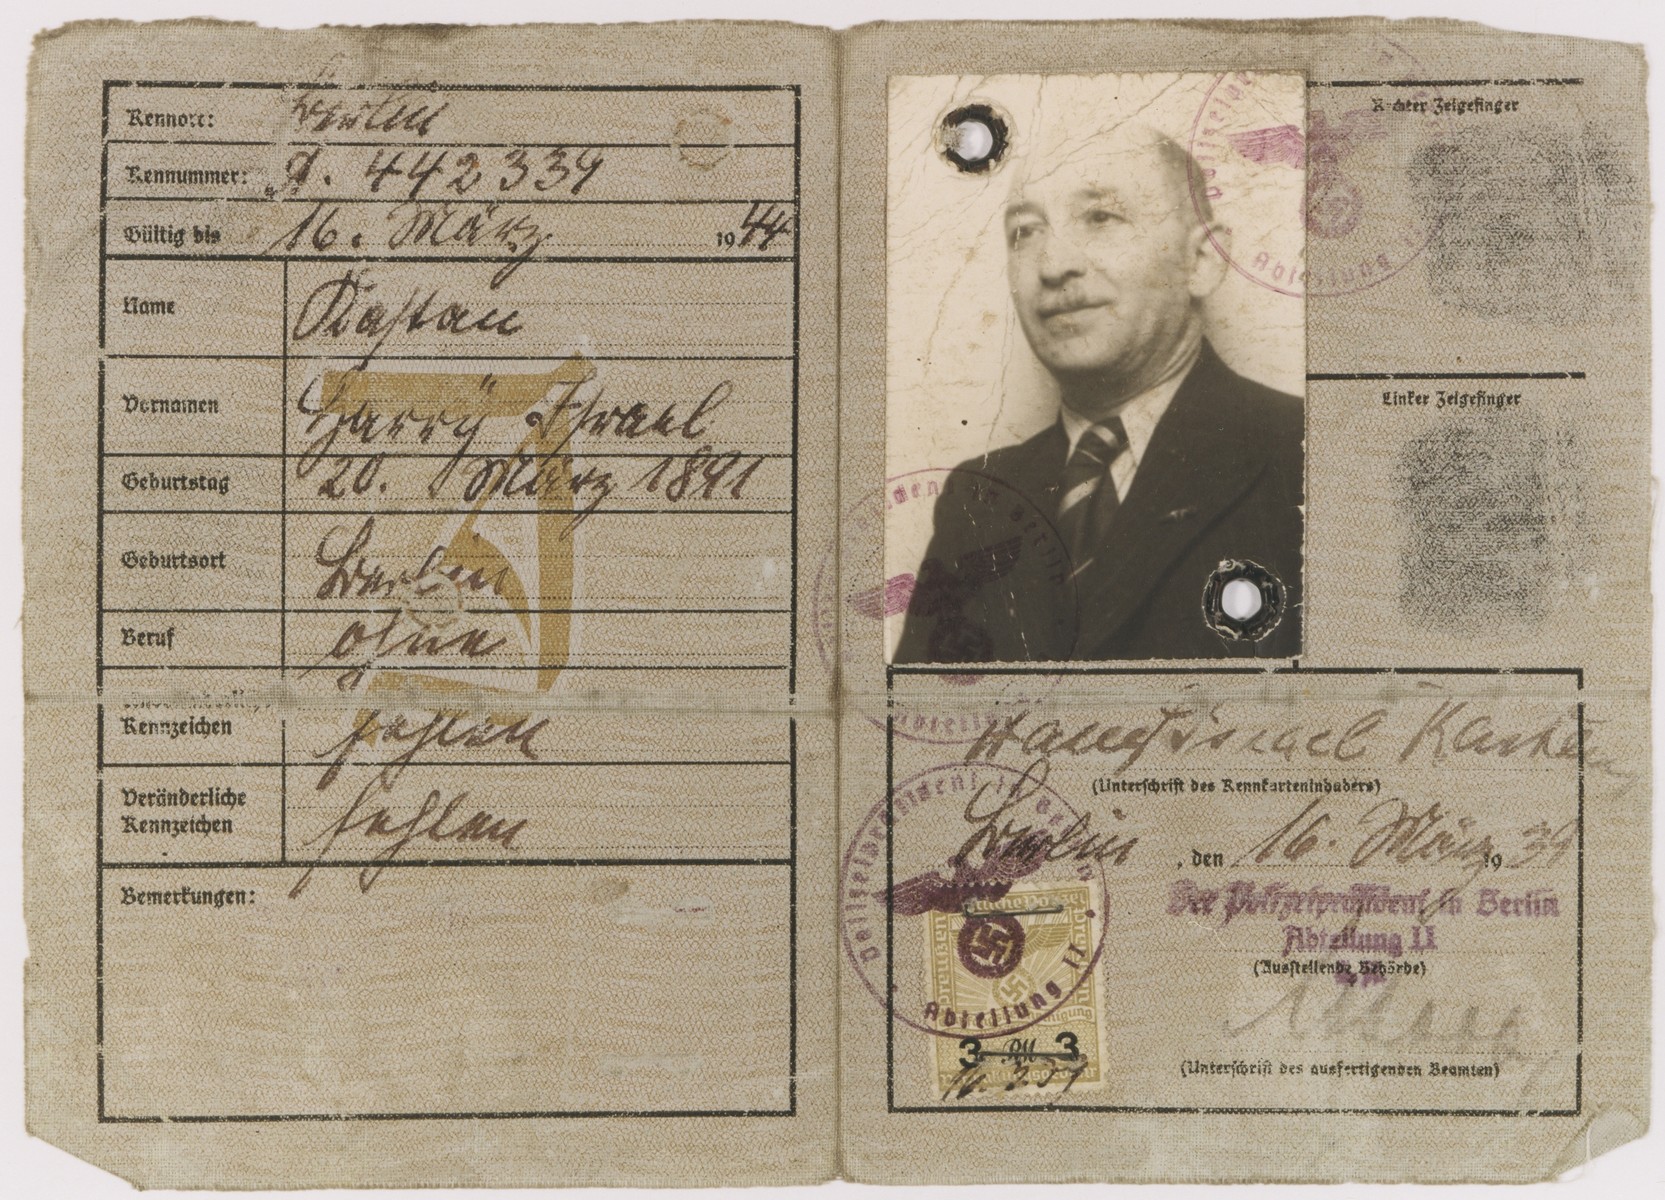 German Kennkarte (identification card) issued by the police president in Berlin on March 16, 1939 to Harry Israel Kastan (b. March 20, 1891), a Jew living in Berlin.